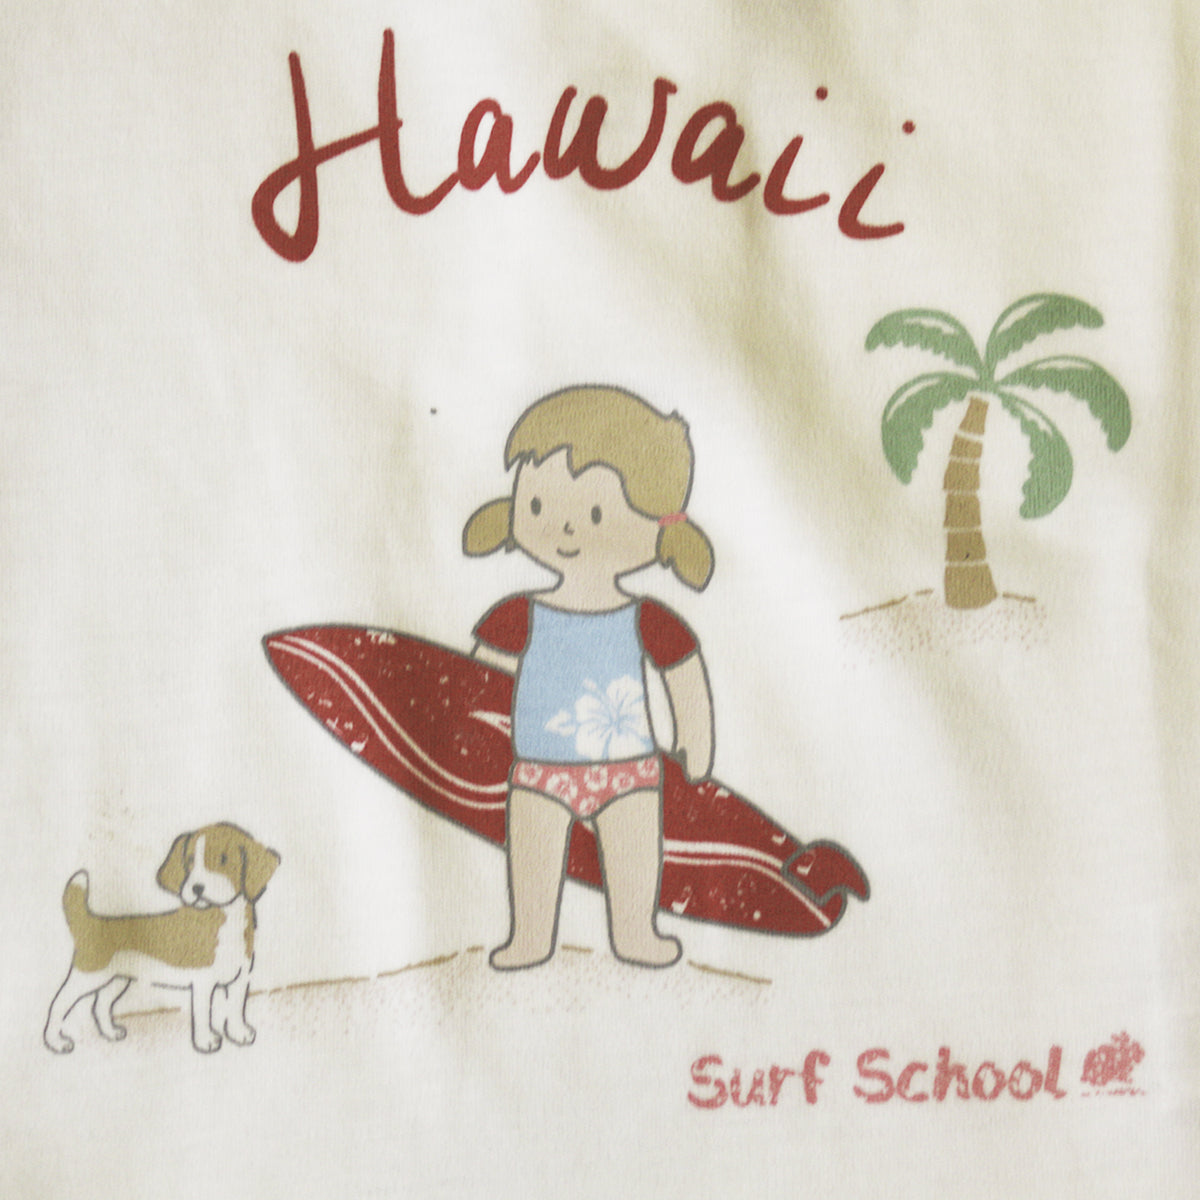 Camiseta Babycottons Hawaii Blanco y Rosa